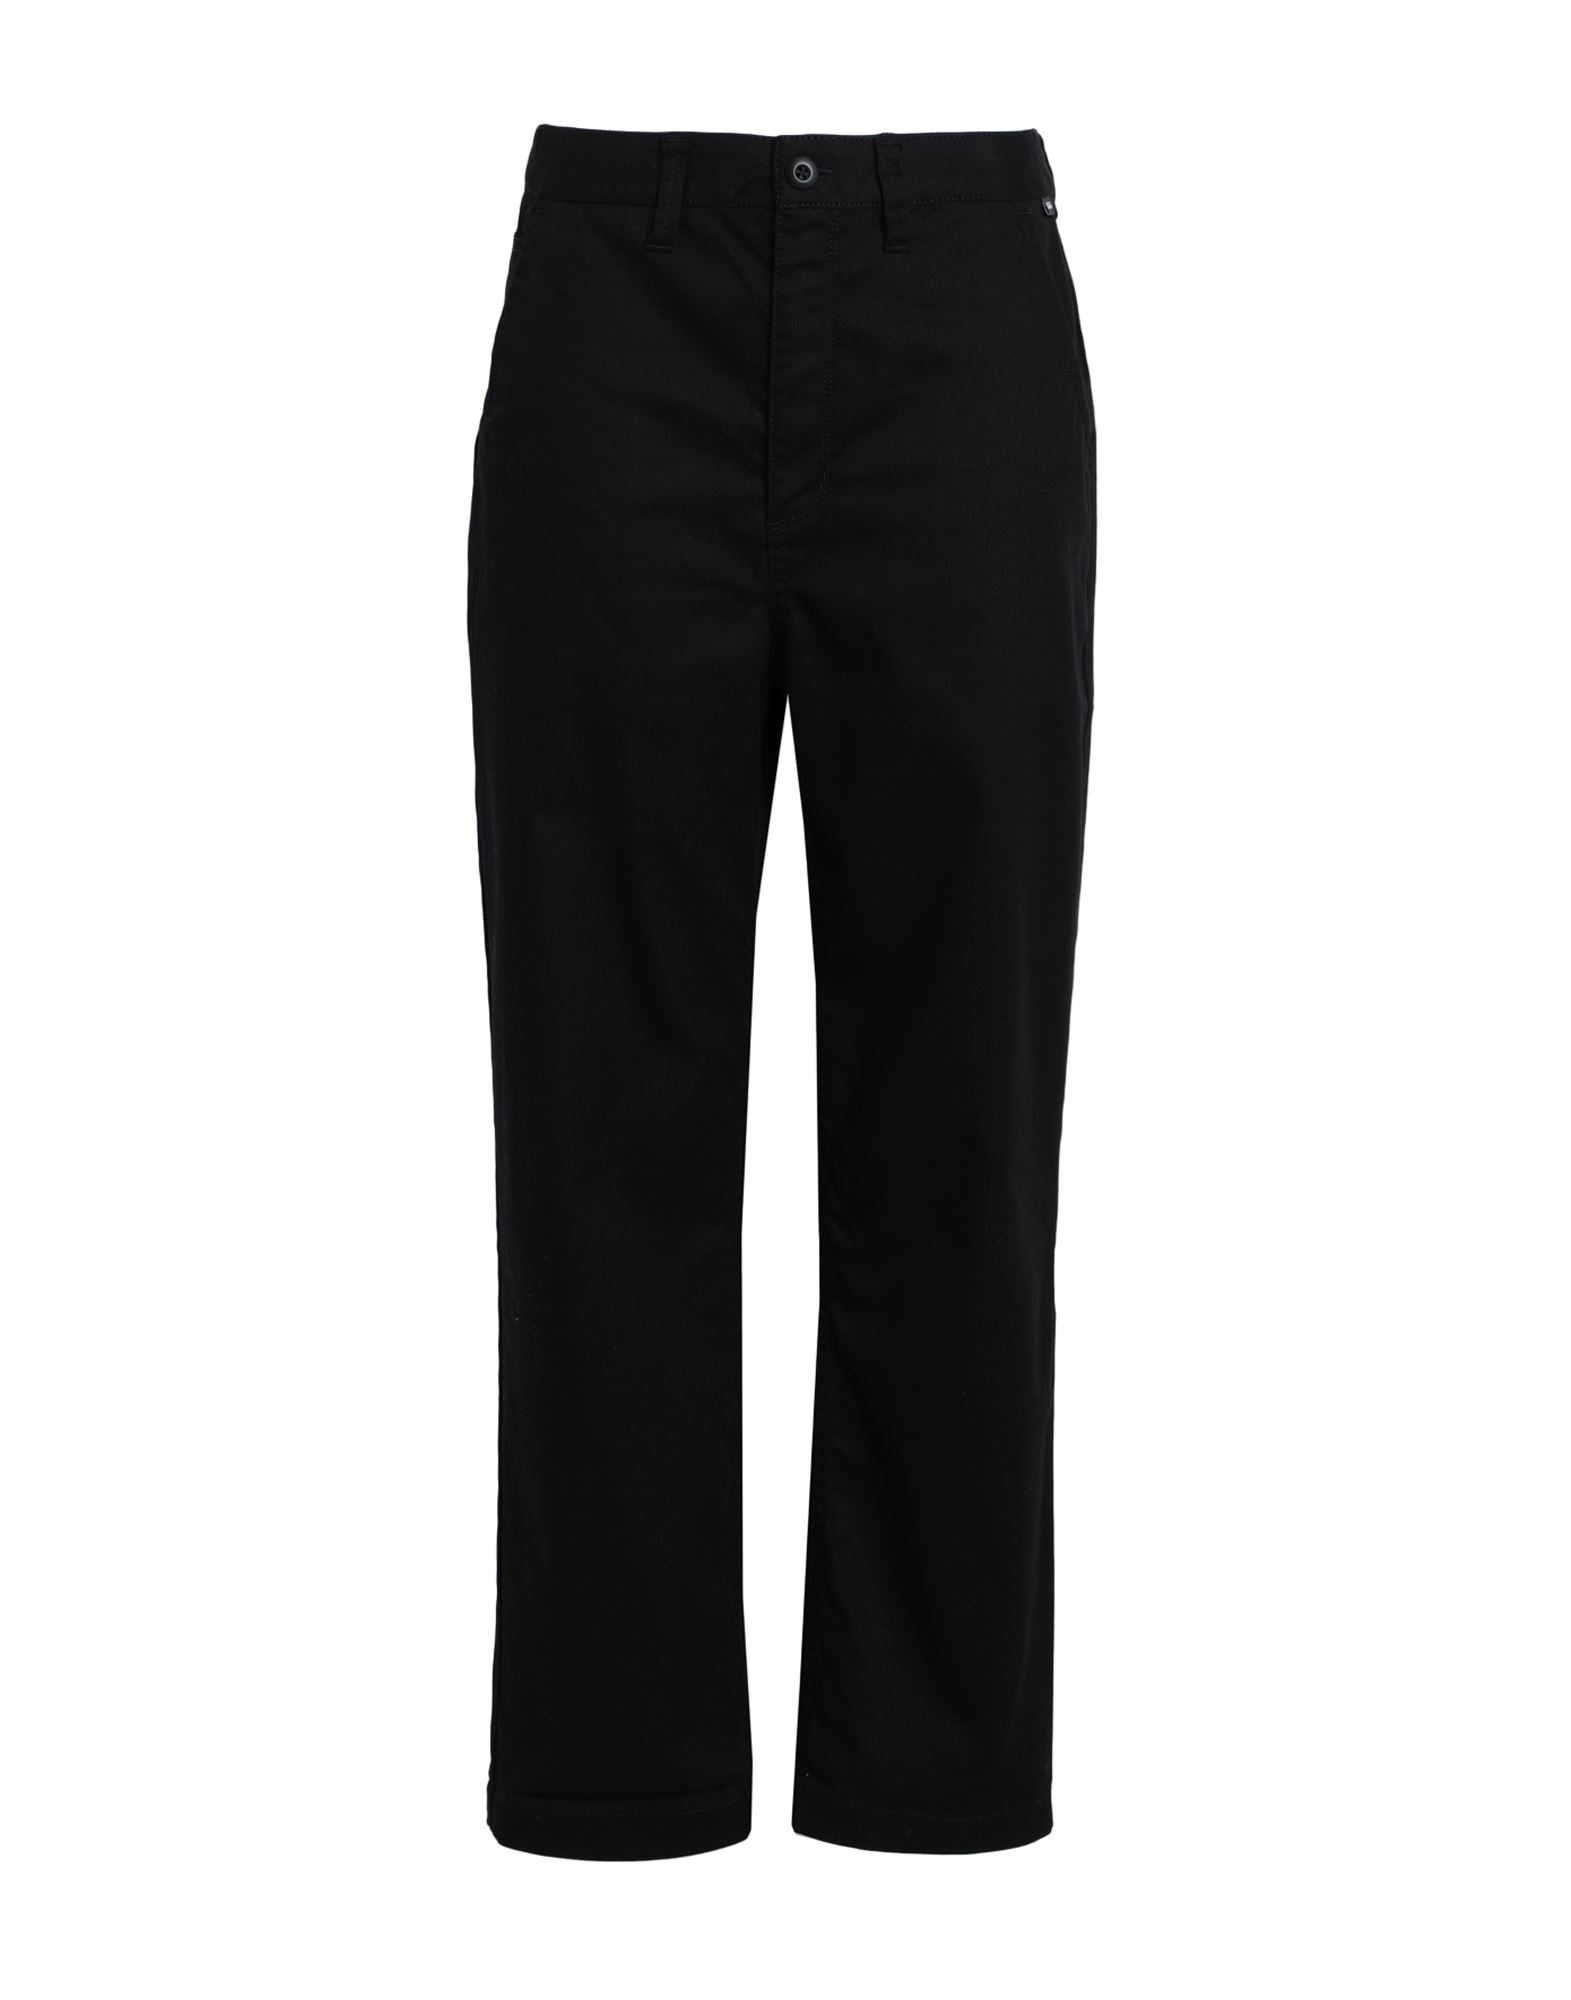 Vans Wm Authentic Wmn Chino Woman Pants Black Size 29 Cotton, Polyester, Elastane